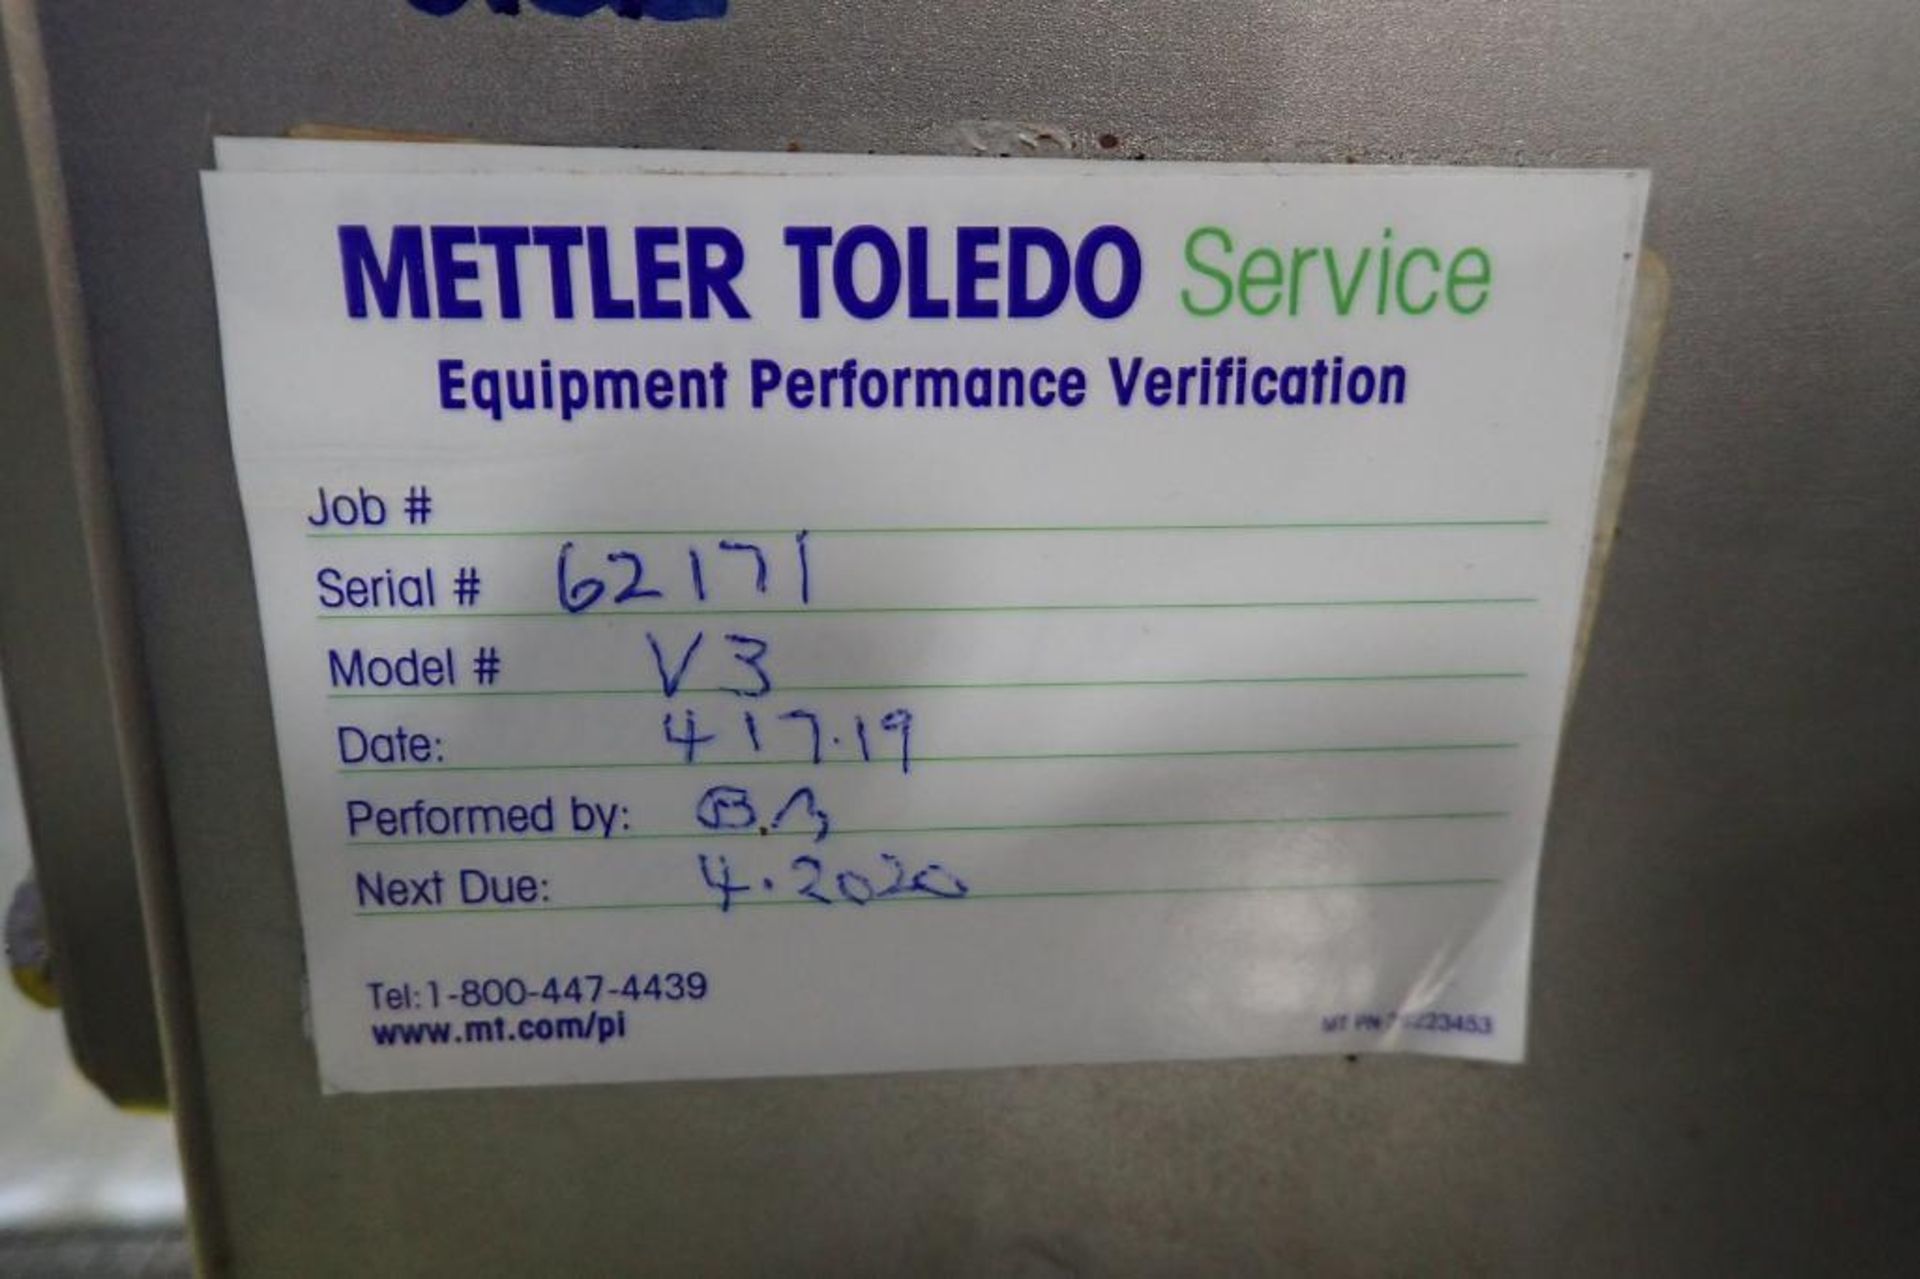 Safeline Mettler Toledo metal detector, Model V3, SN 62171, 6 in. wide x 4 in. tall aperture, convey - Image 9 of 11